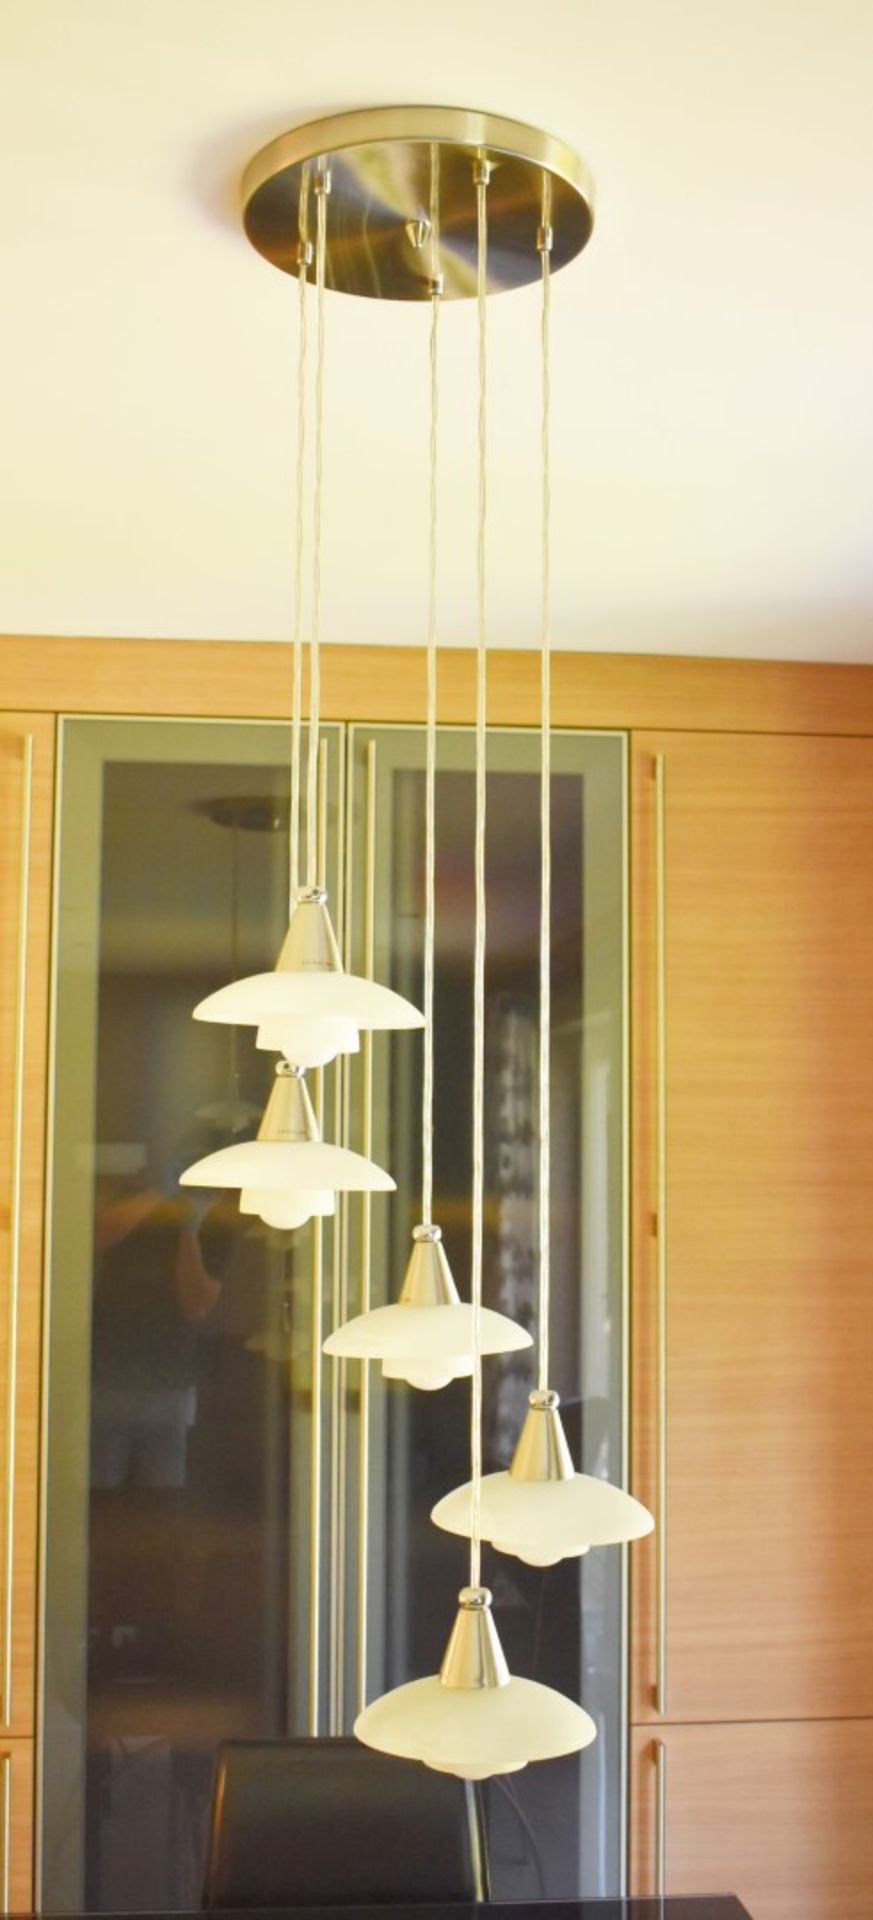 1 x Layered Venetian Murano Glass 5 Light Ceiling Fitting - 125cm Drop - Each Light 8cm Diameter -